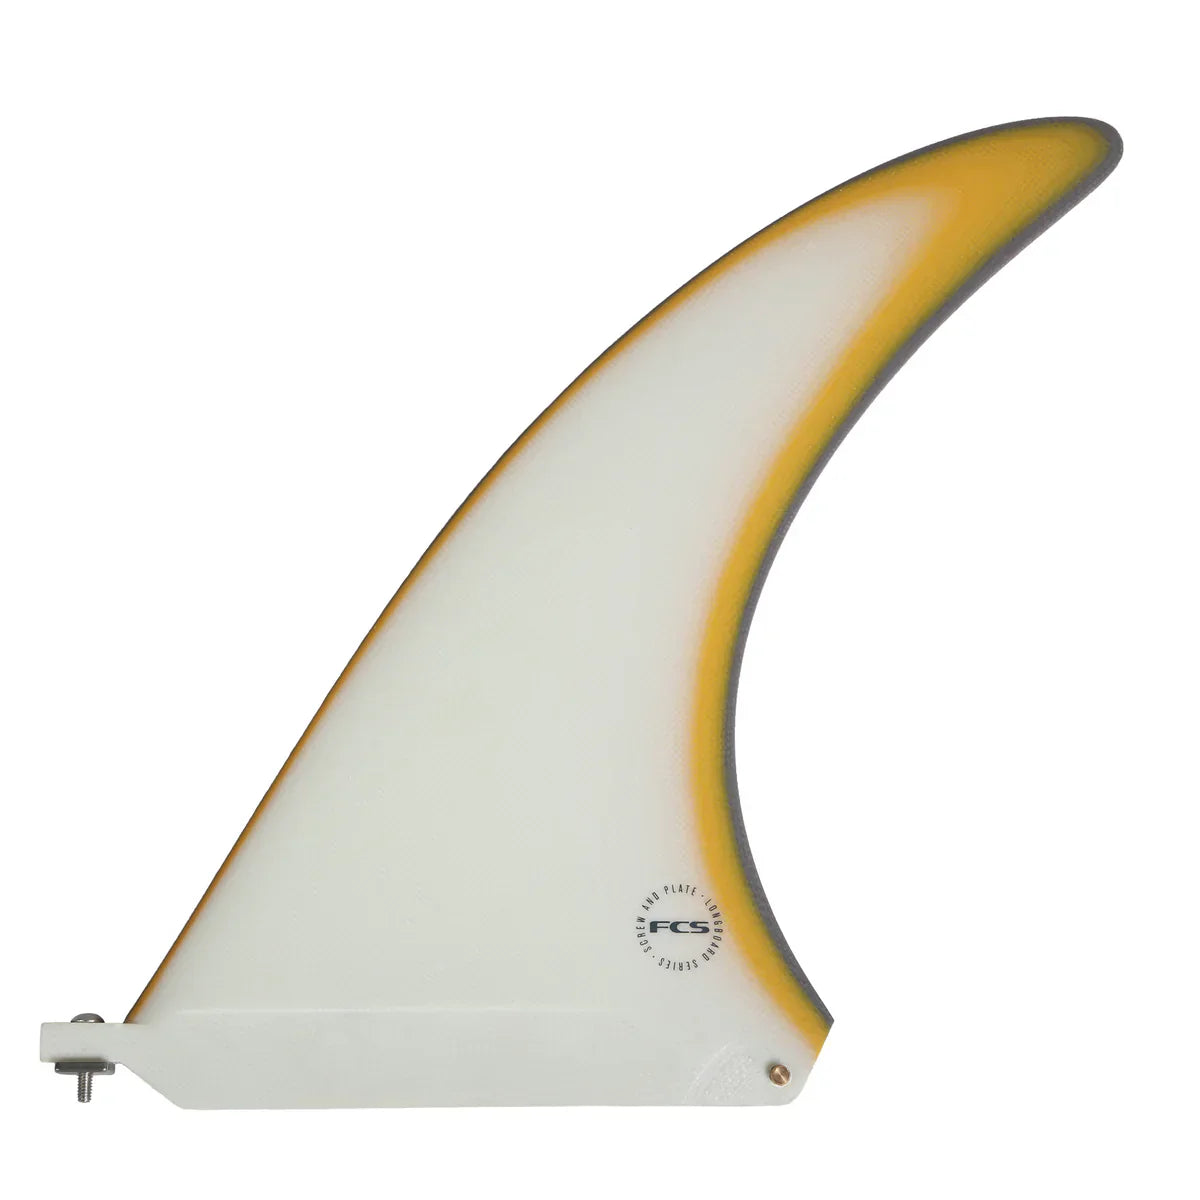 fcs-flow-fin-screw-and-plate-mango-clear-white-surfboard-longboard-fin-PG-performance-glass-galway-ireland-blacksheepsurfco-10.5-inch